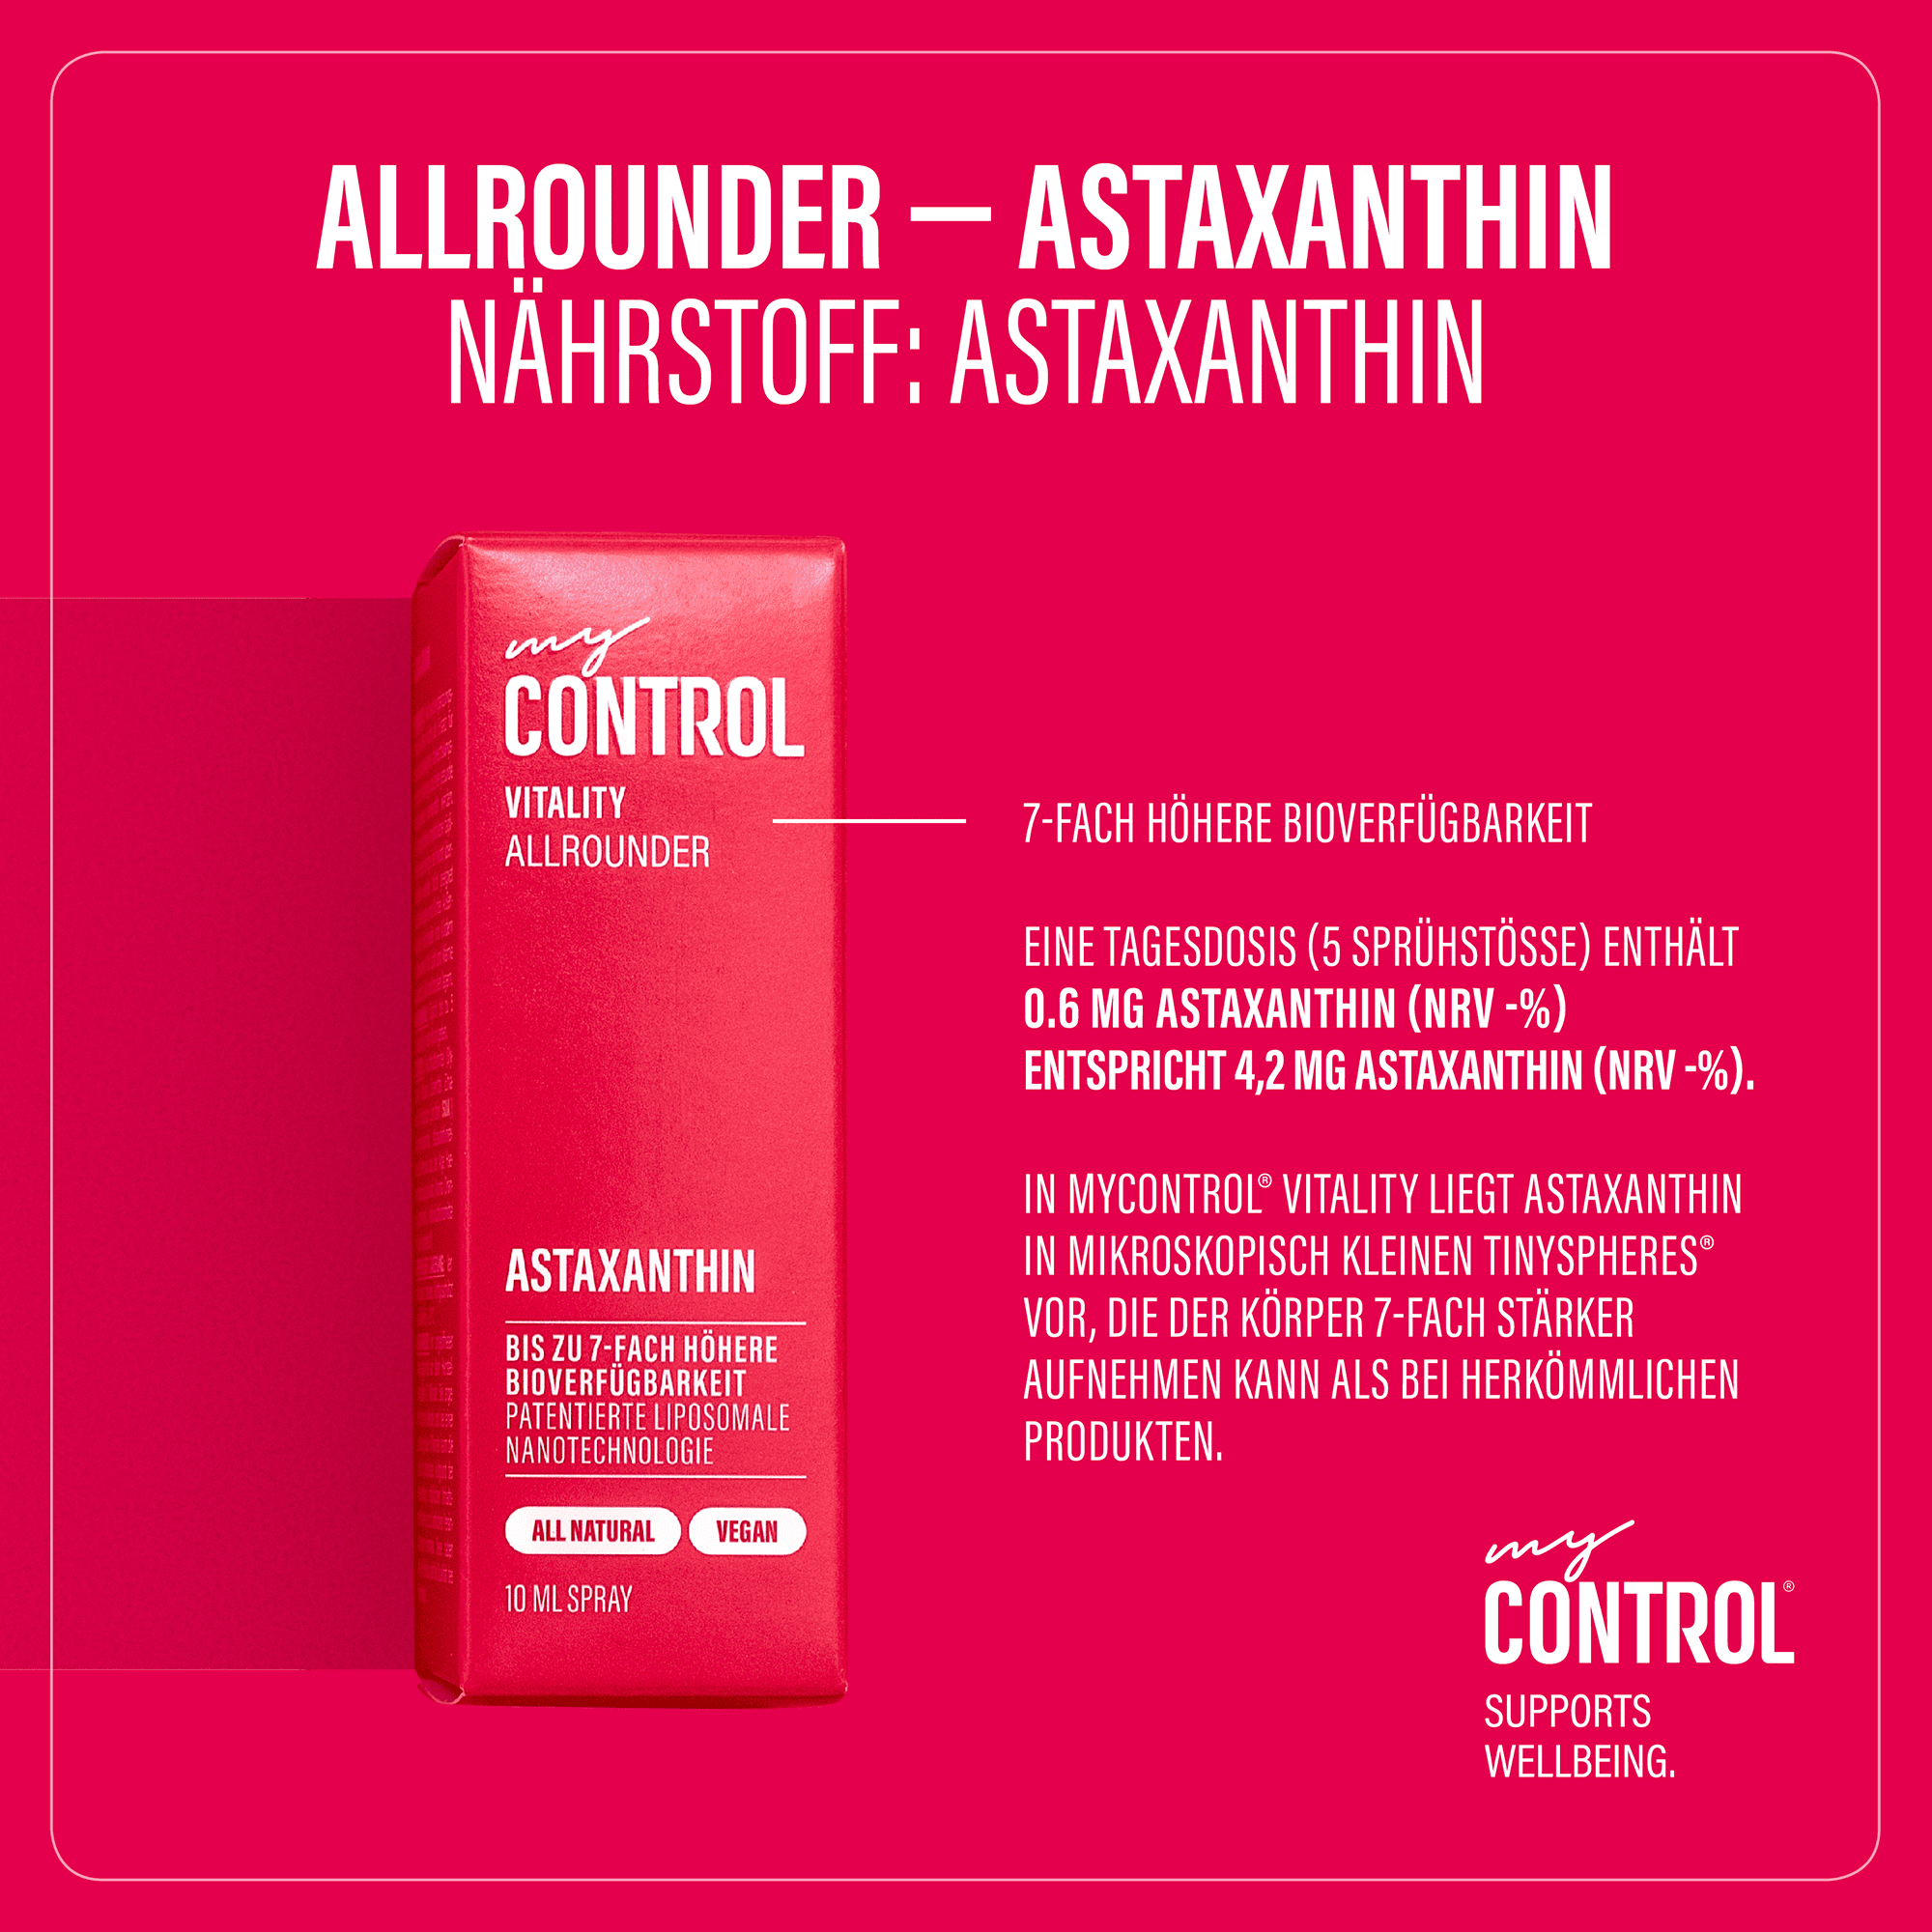 Allrounder – Astaxanthin